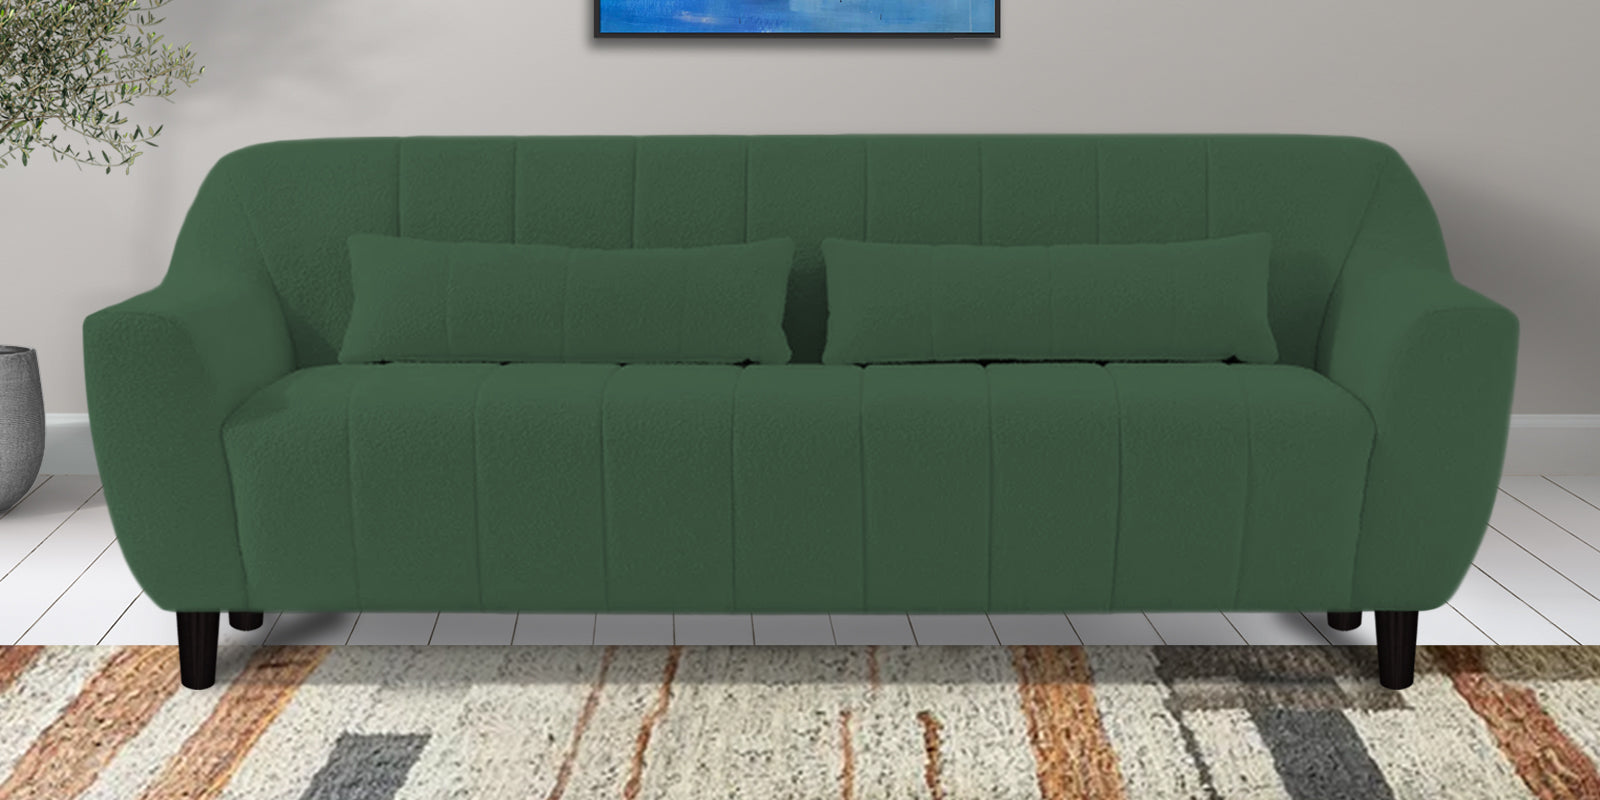 Nesco Fur Fabric 3 Seater Sofa in Bottle Green Colour